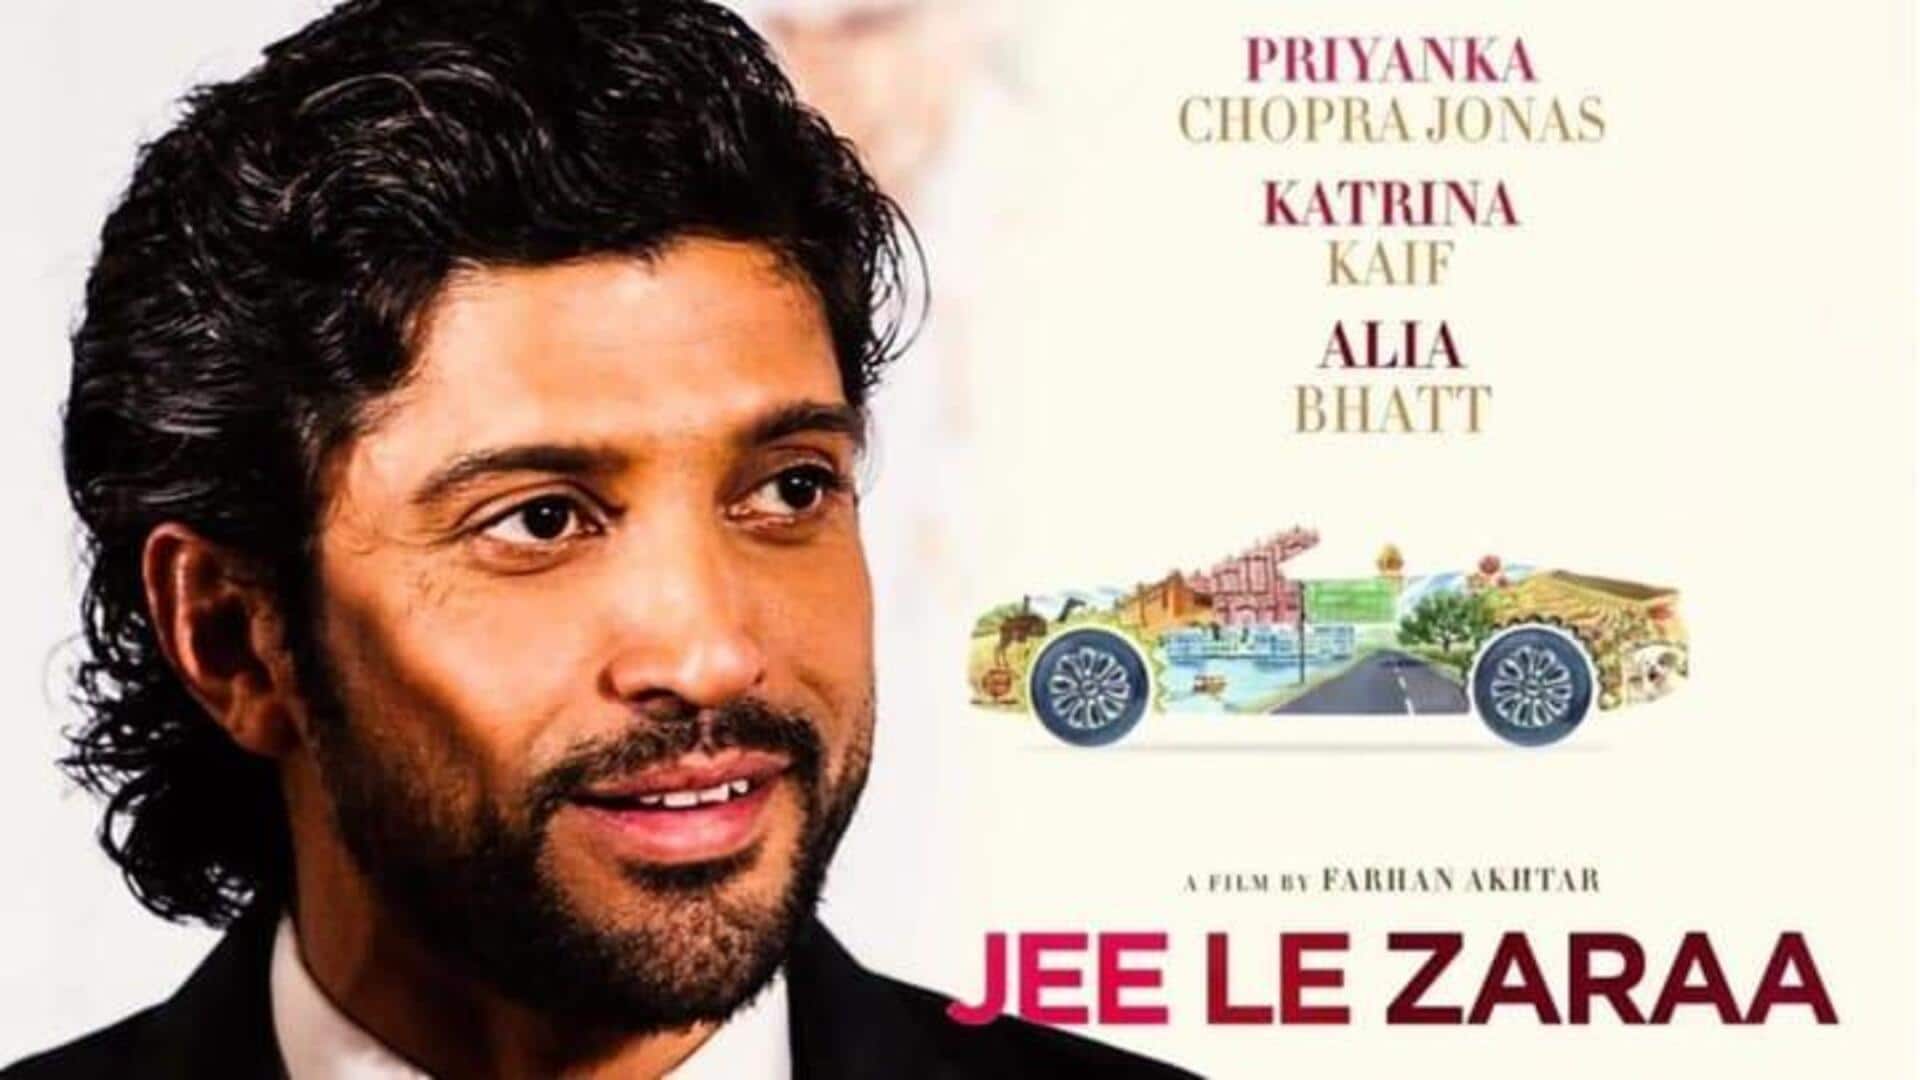 'Jee Le Zaraa' 'shelved' as Priyanka Chopra disliked script: Report